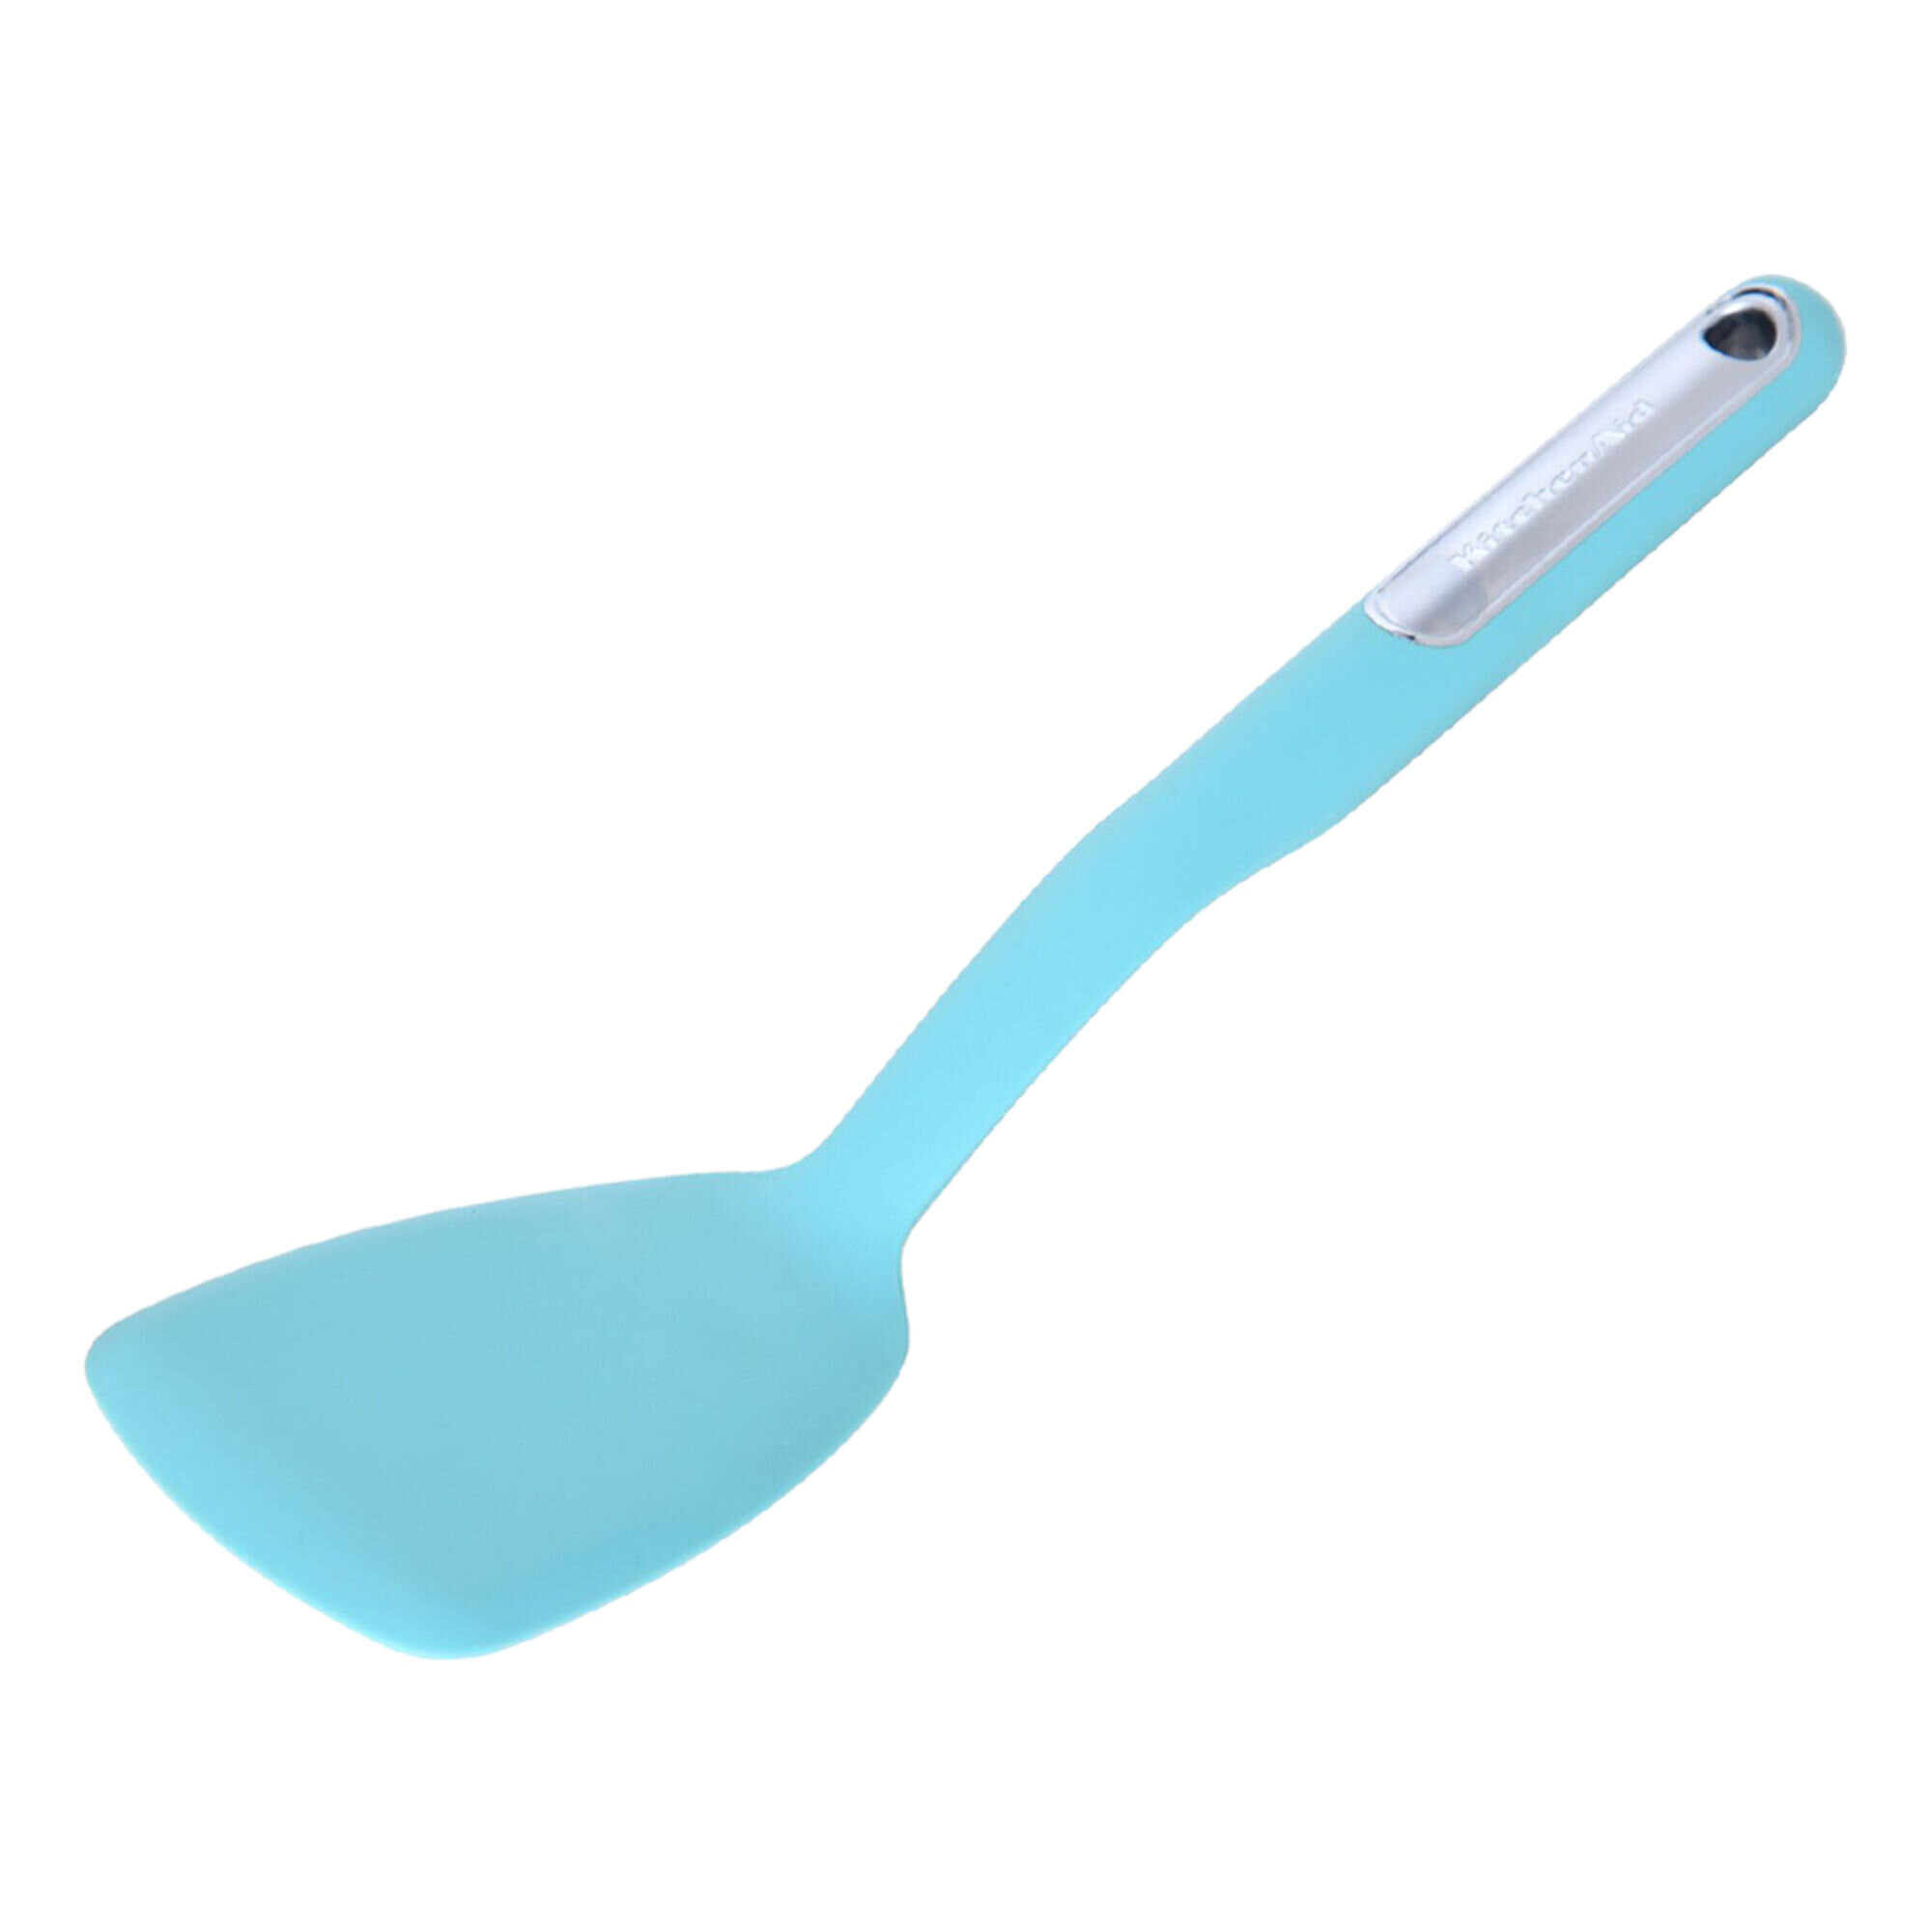 KitchenAid slotted turner spatula in light blue Aqua New 